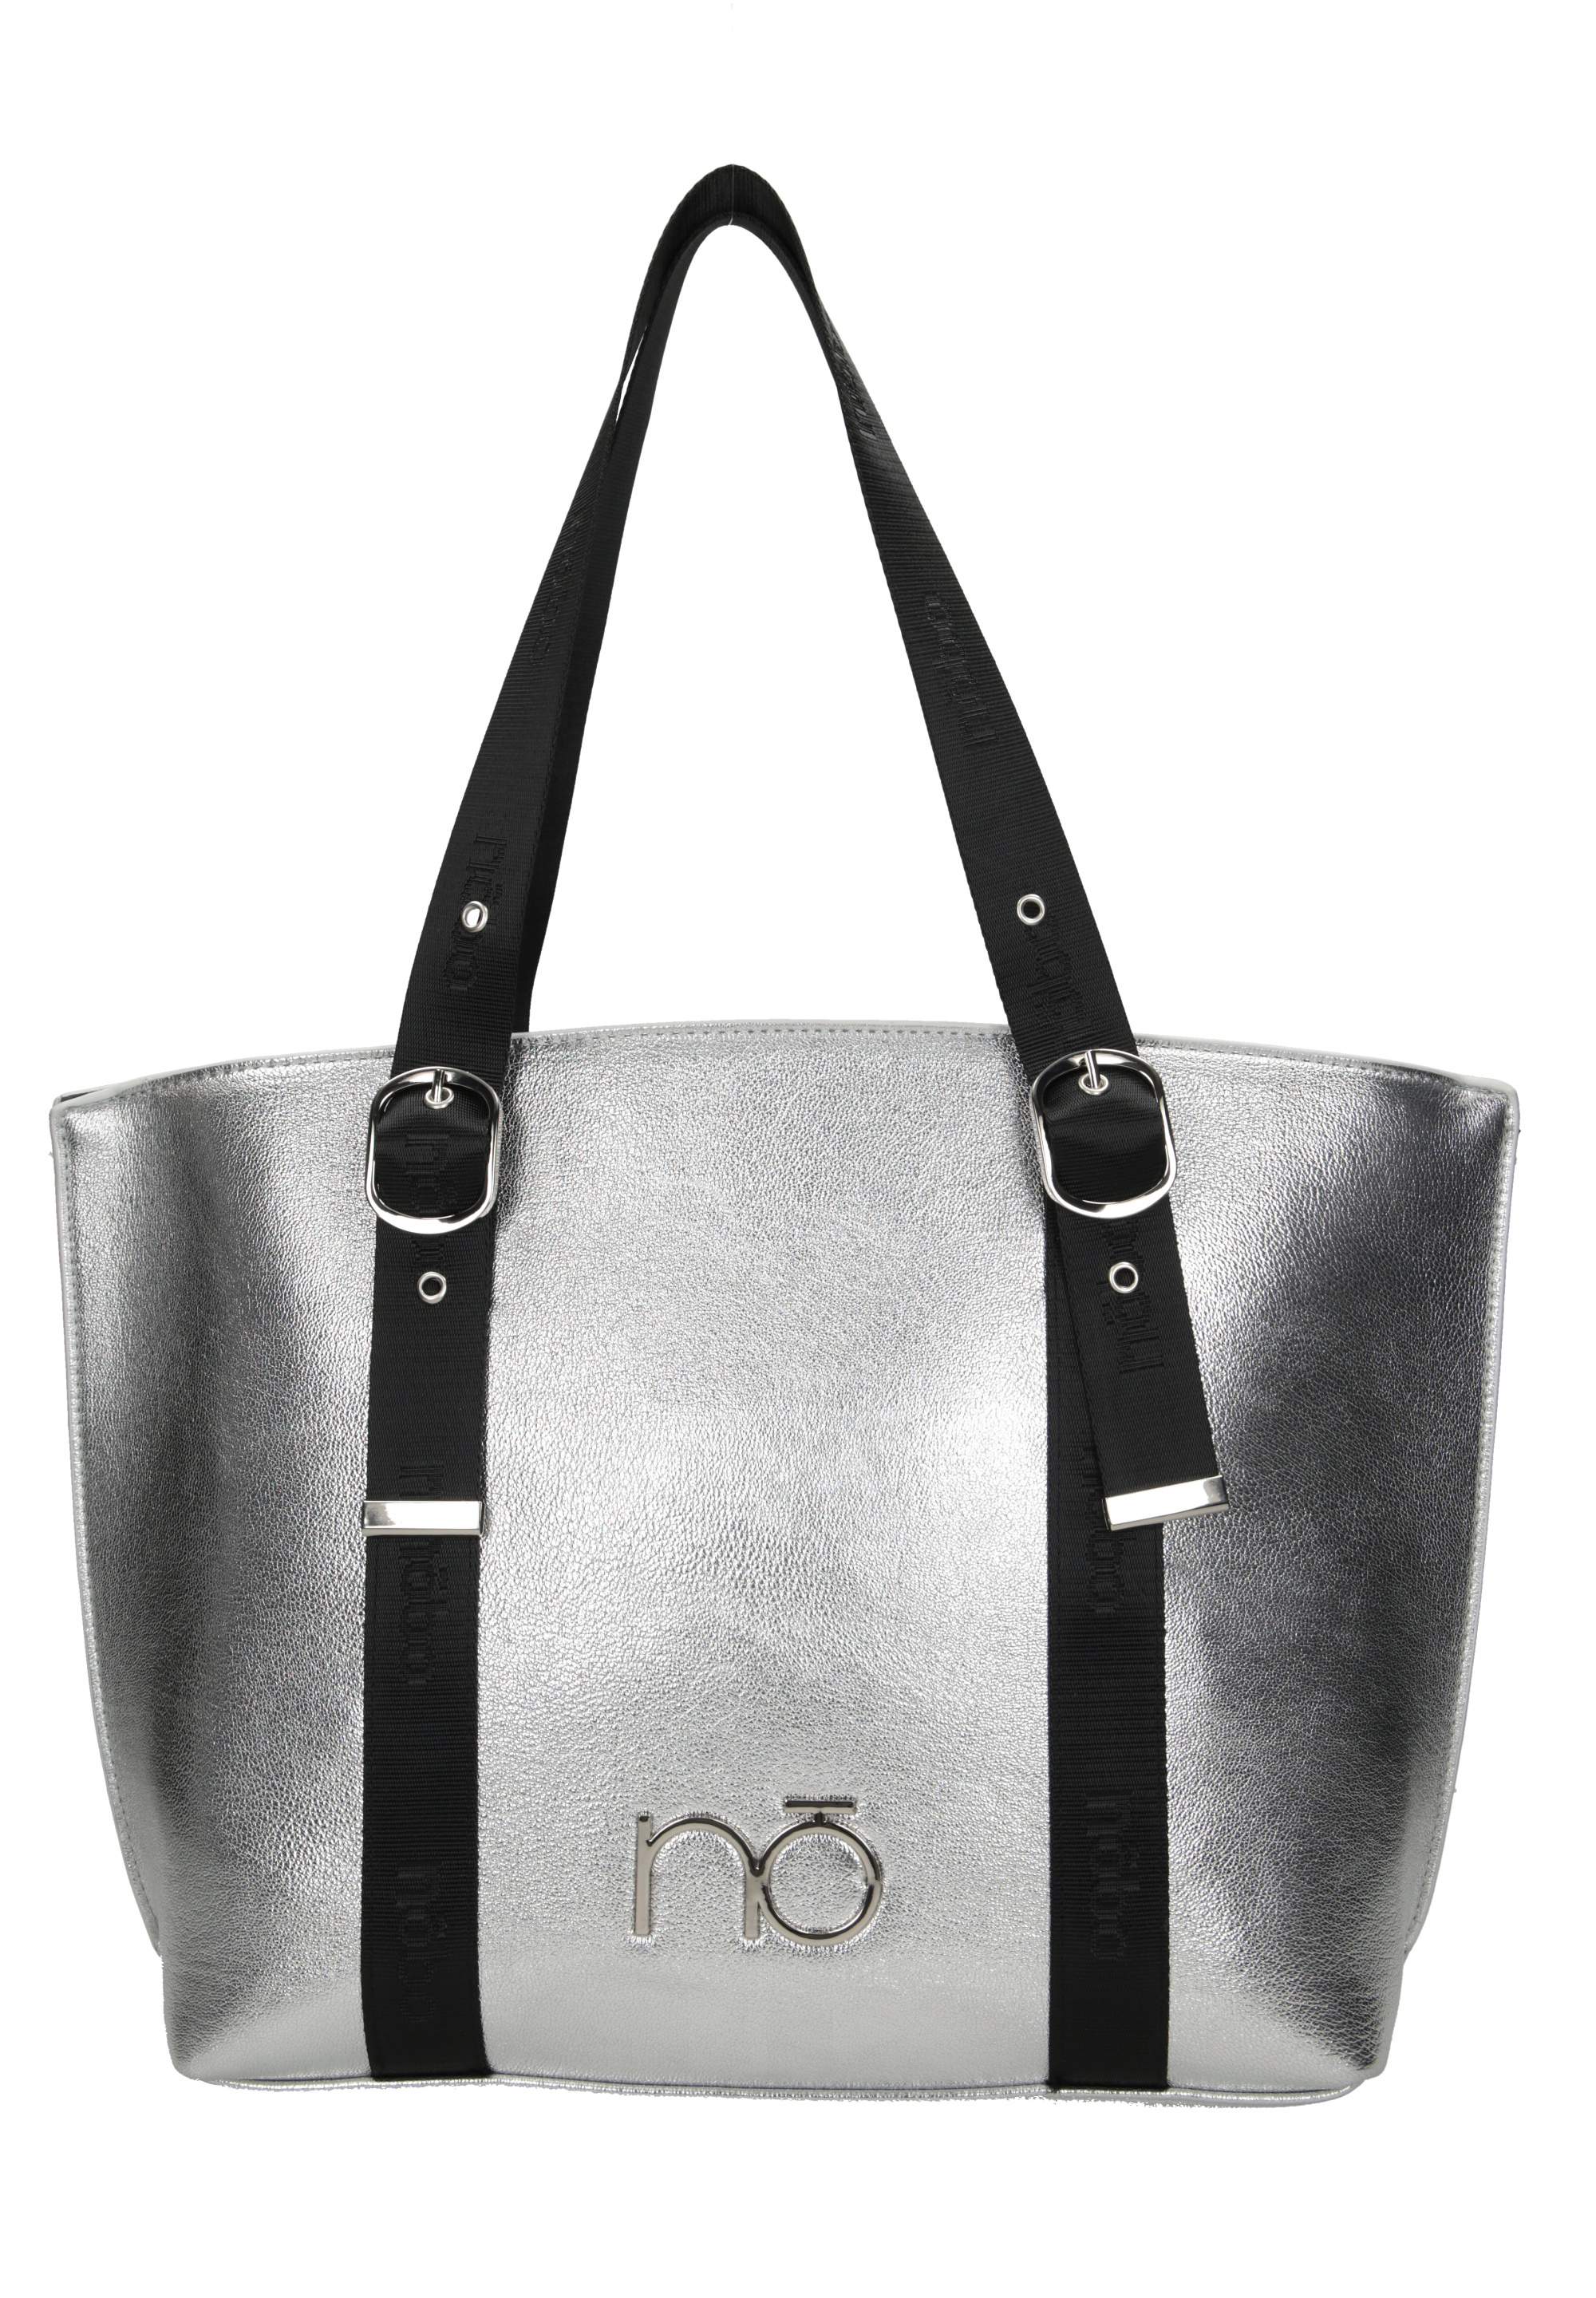 Сумка шоппер Nobo Bags Shiny, цвет silver coloured сумка шоппер nobo bags radiate цвет dark blue